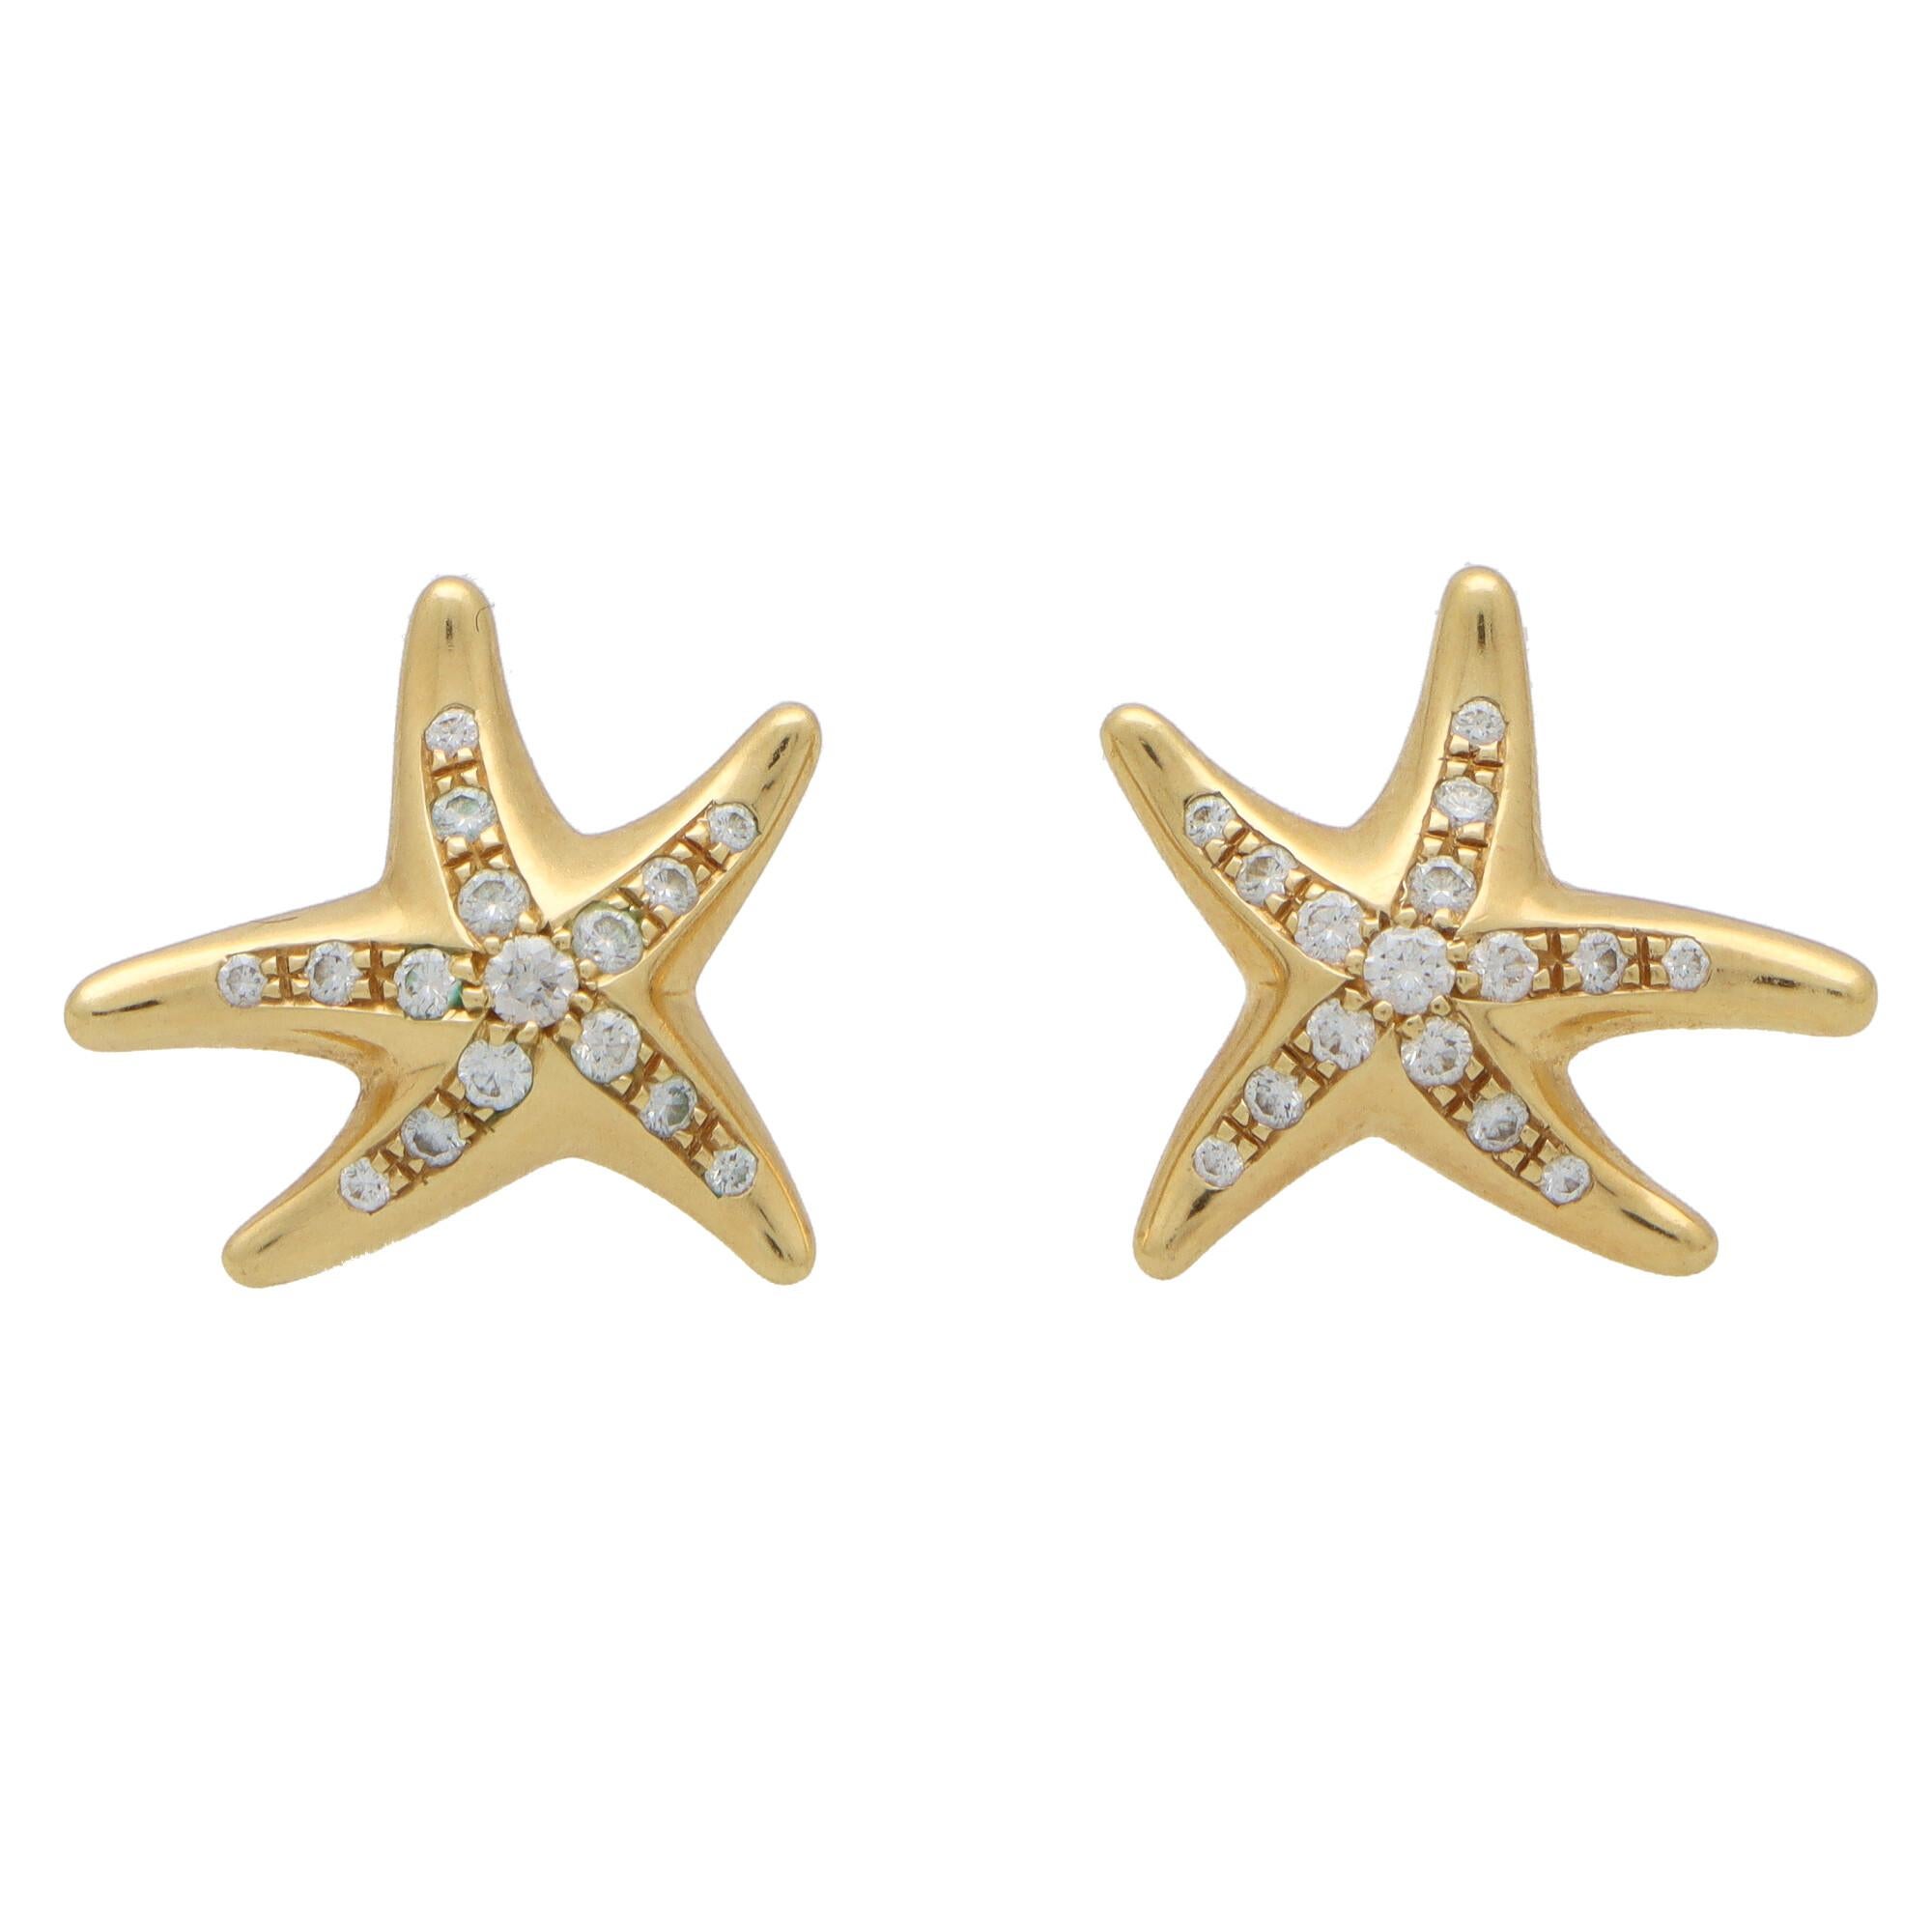 Modern Vintage Elsa Peretti for Tiffany & Co. Diamond Starfish Earrings in 18k Gold